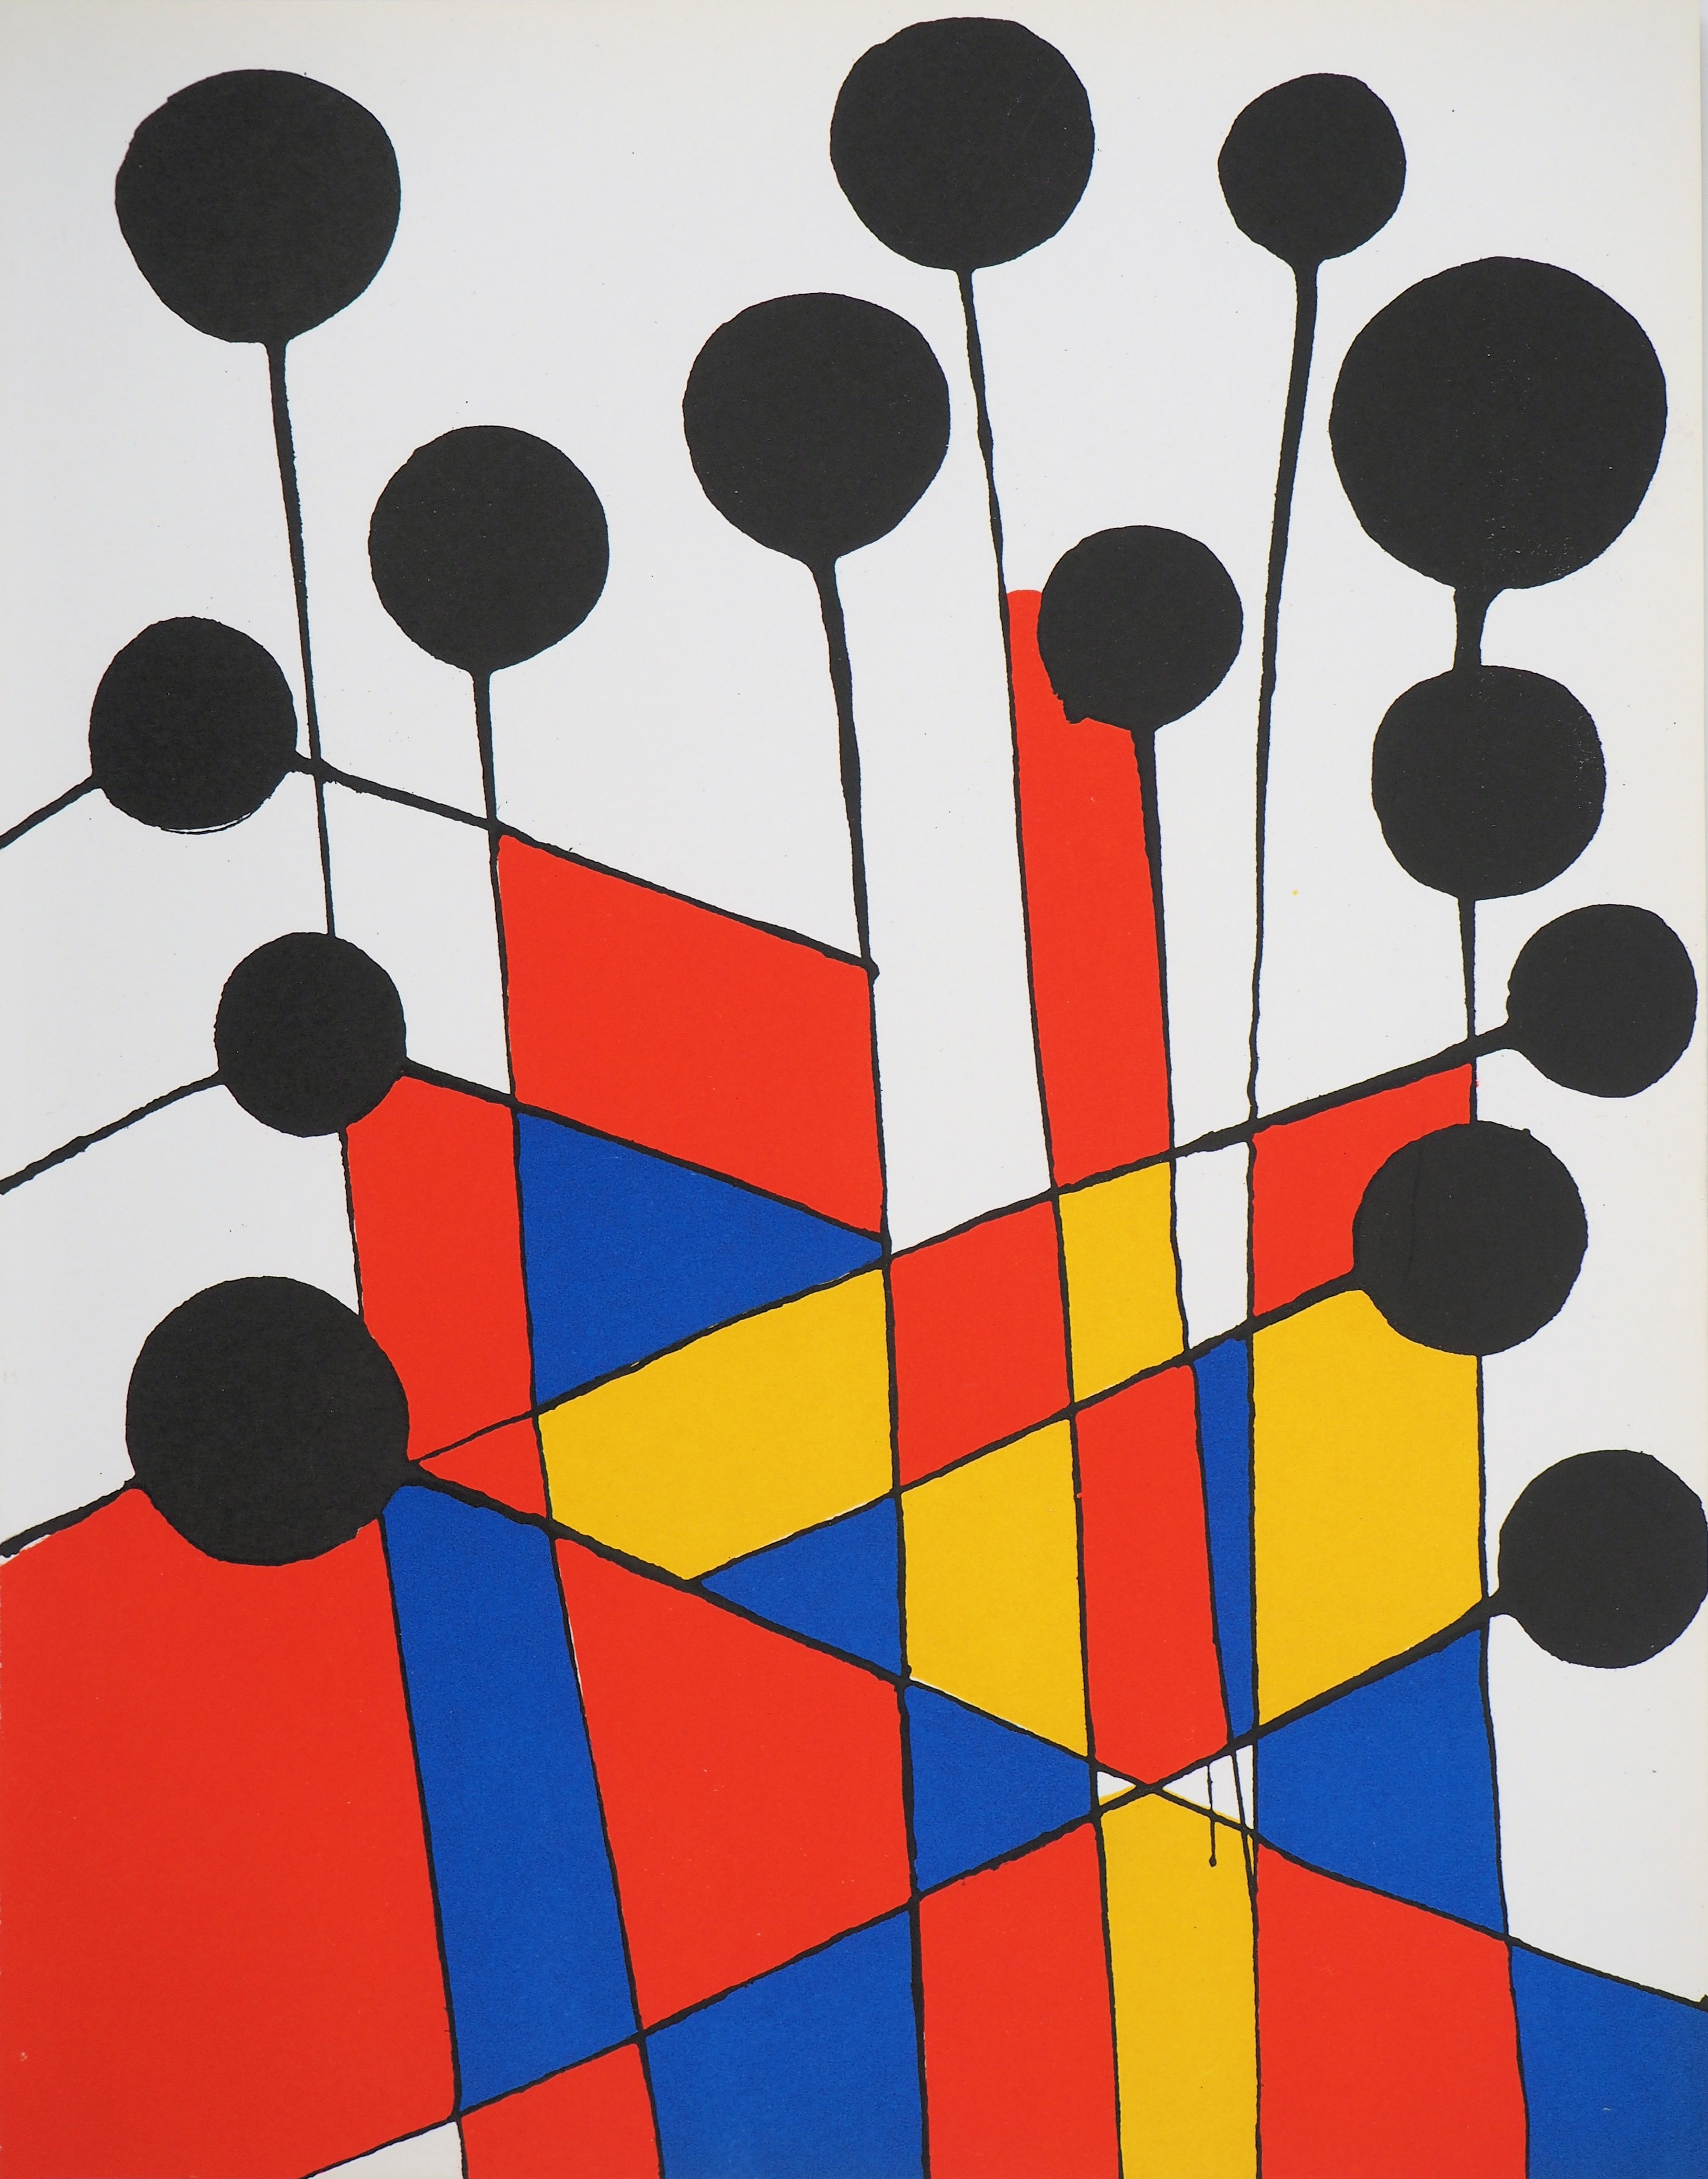 Alexander CALDER Mosaic and Black Balloons, original lithograph, 1971